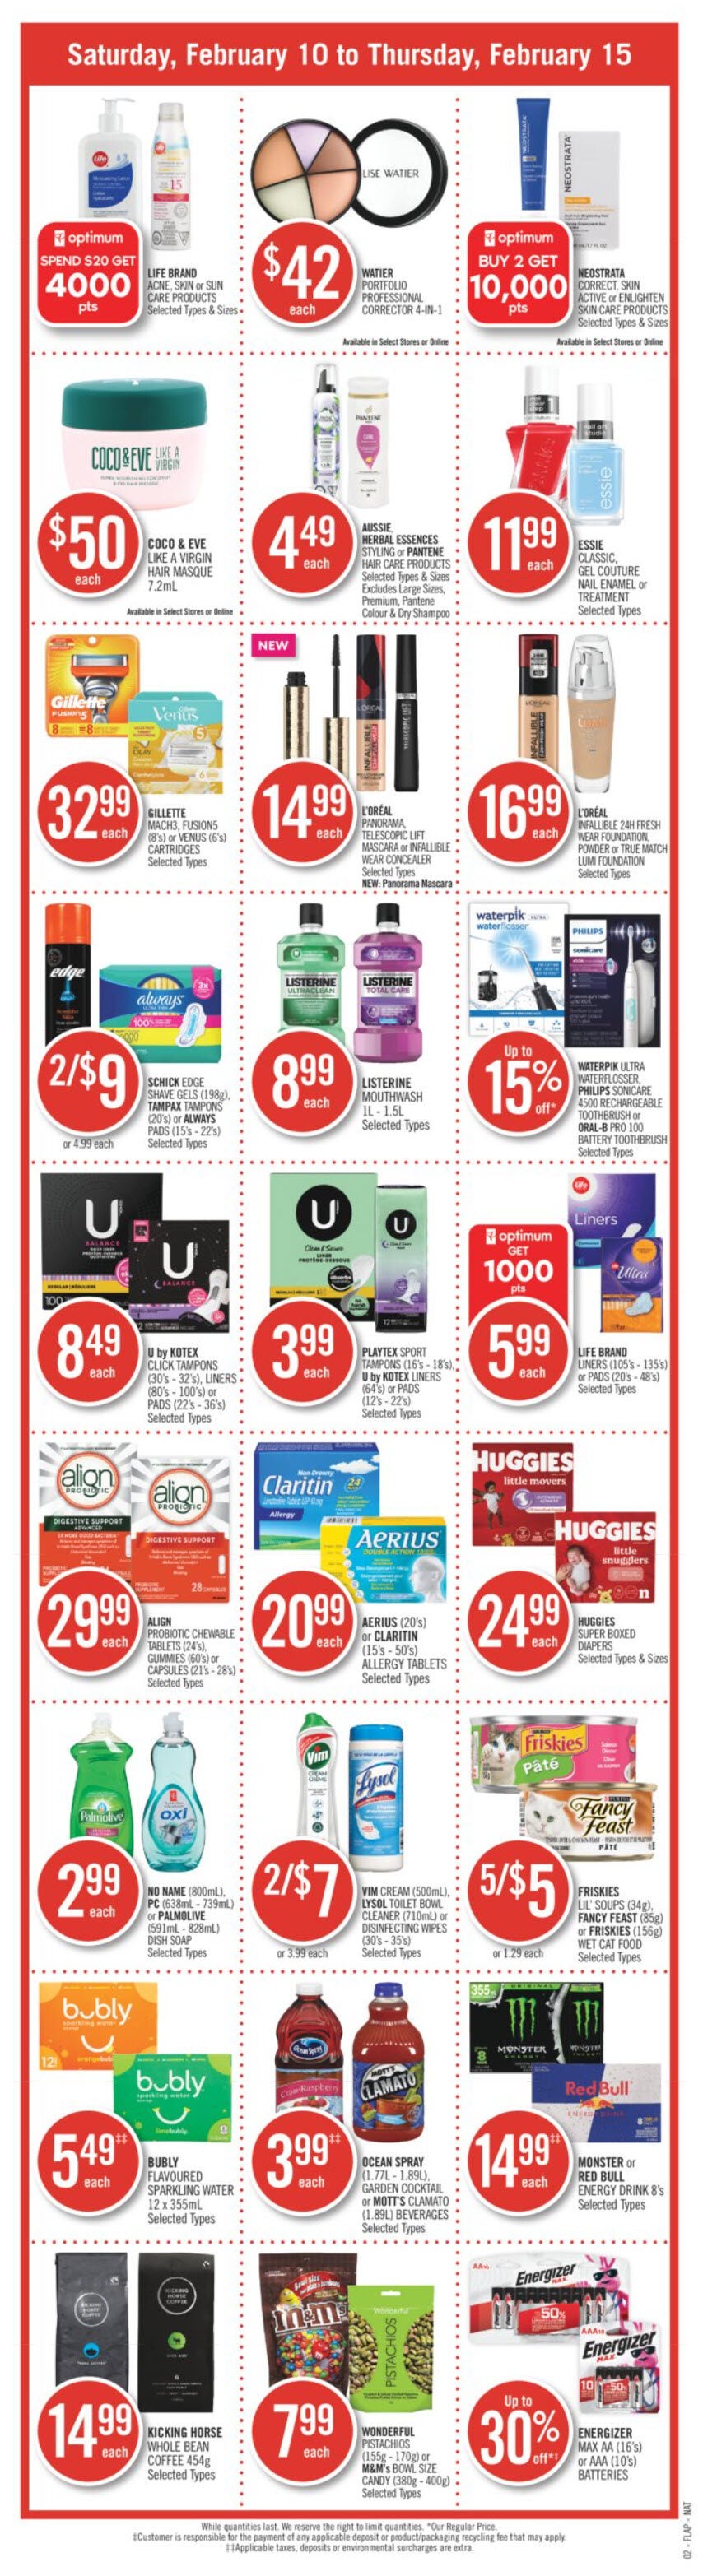 NINJAMAS Nighttime Underwear, Shoppers Drug Mart deals this week, Shoppers Drug Mart flyer